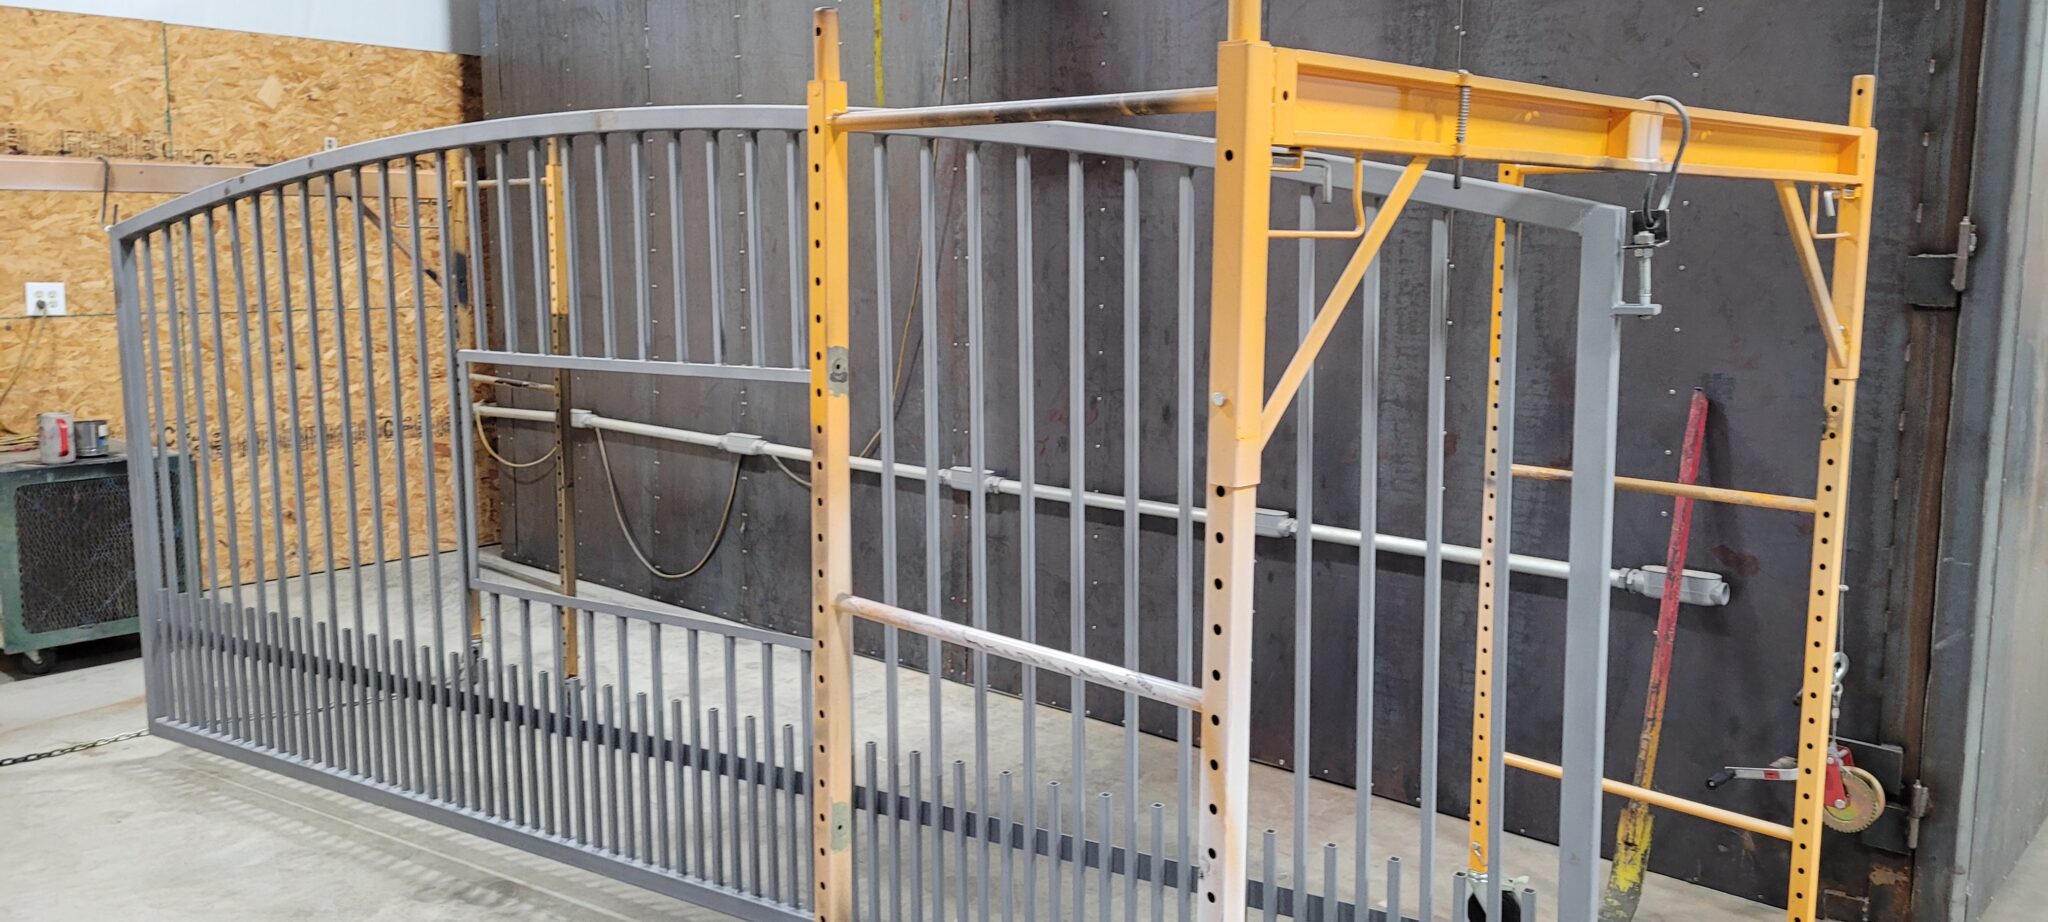 hcs metalworks waco custom metal gate design & construction fabrication